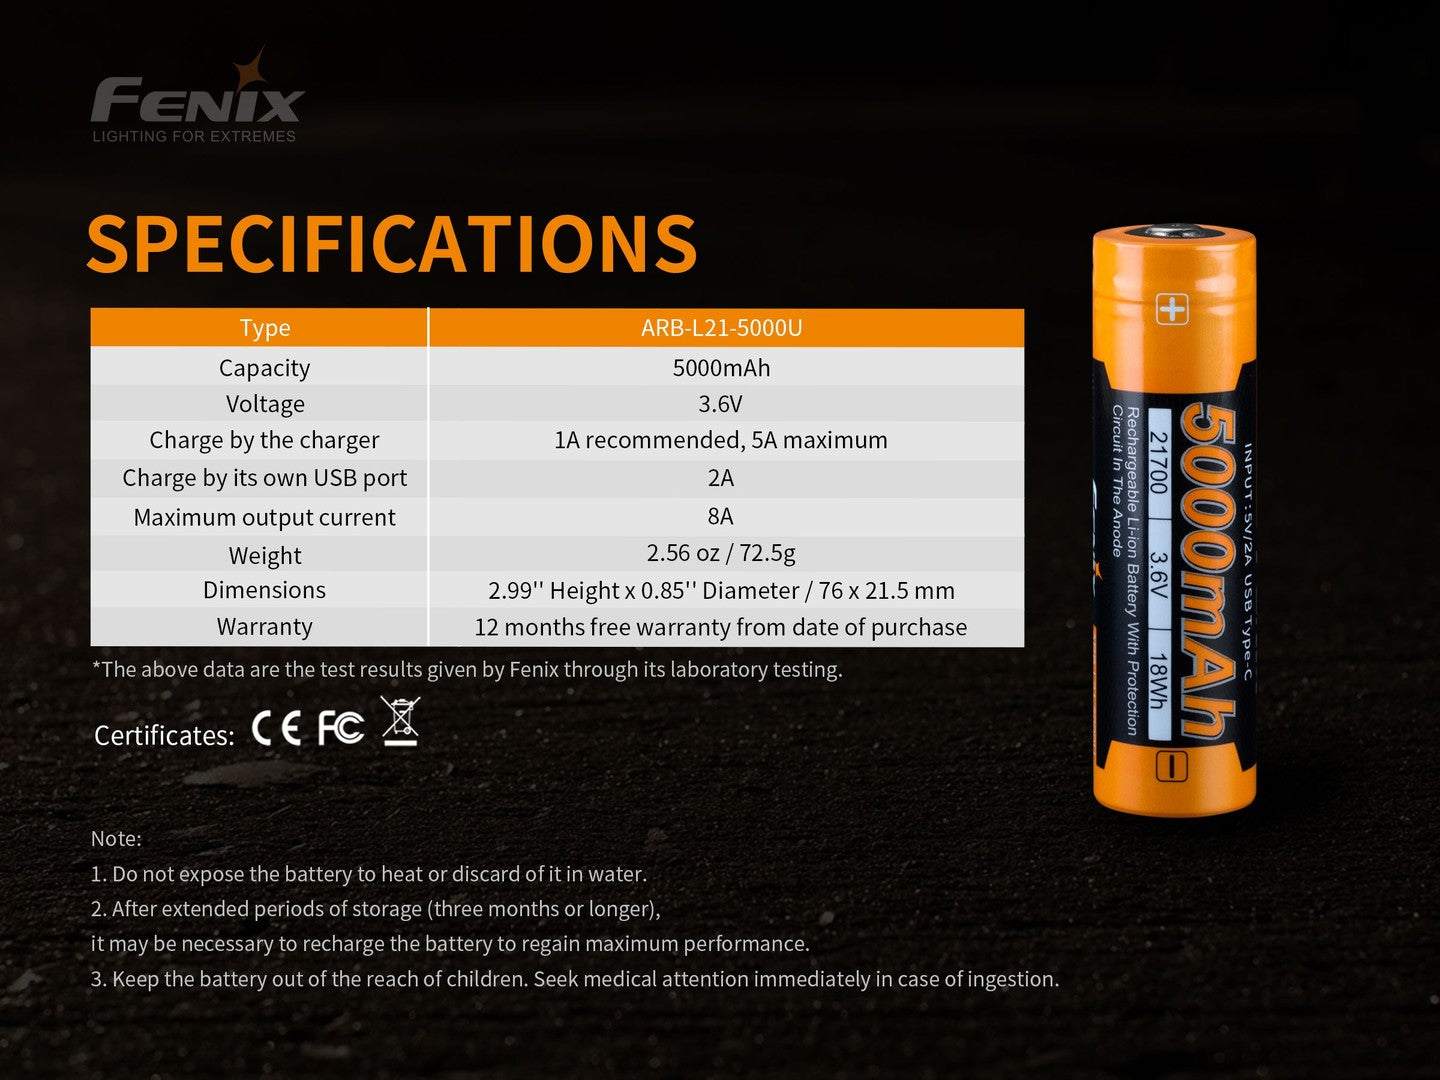 Fenix ARB-L21-5000U - 21700 USB Rechargeable Li-ion Battery with USB Port